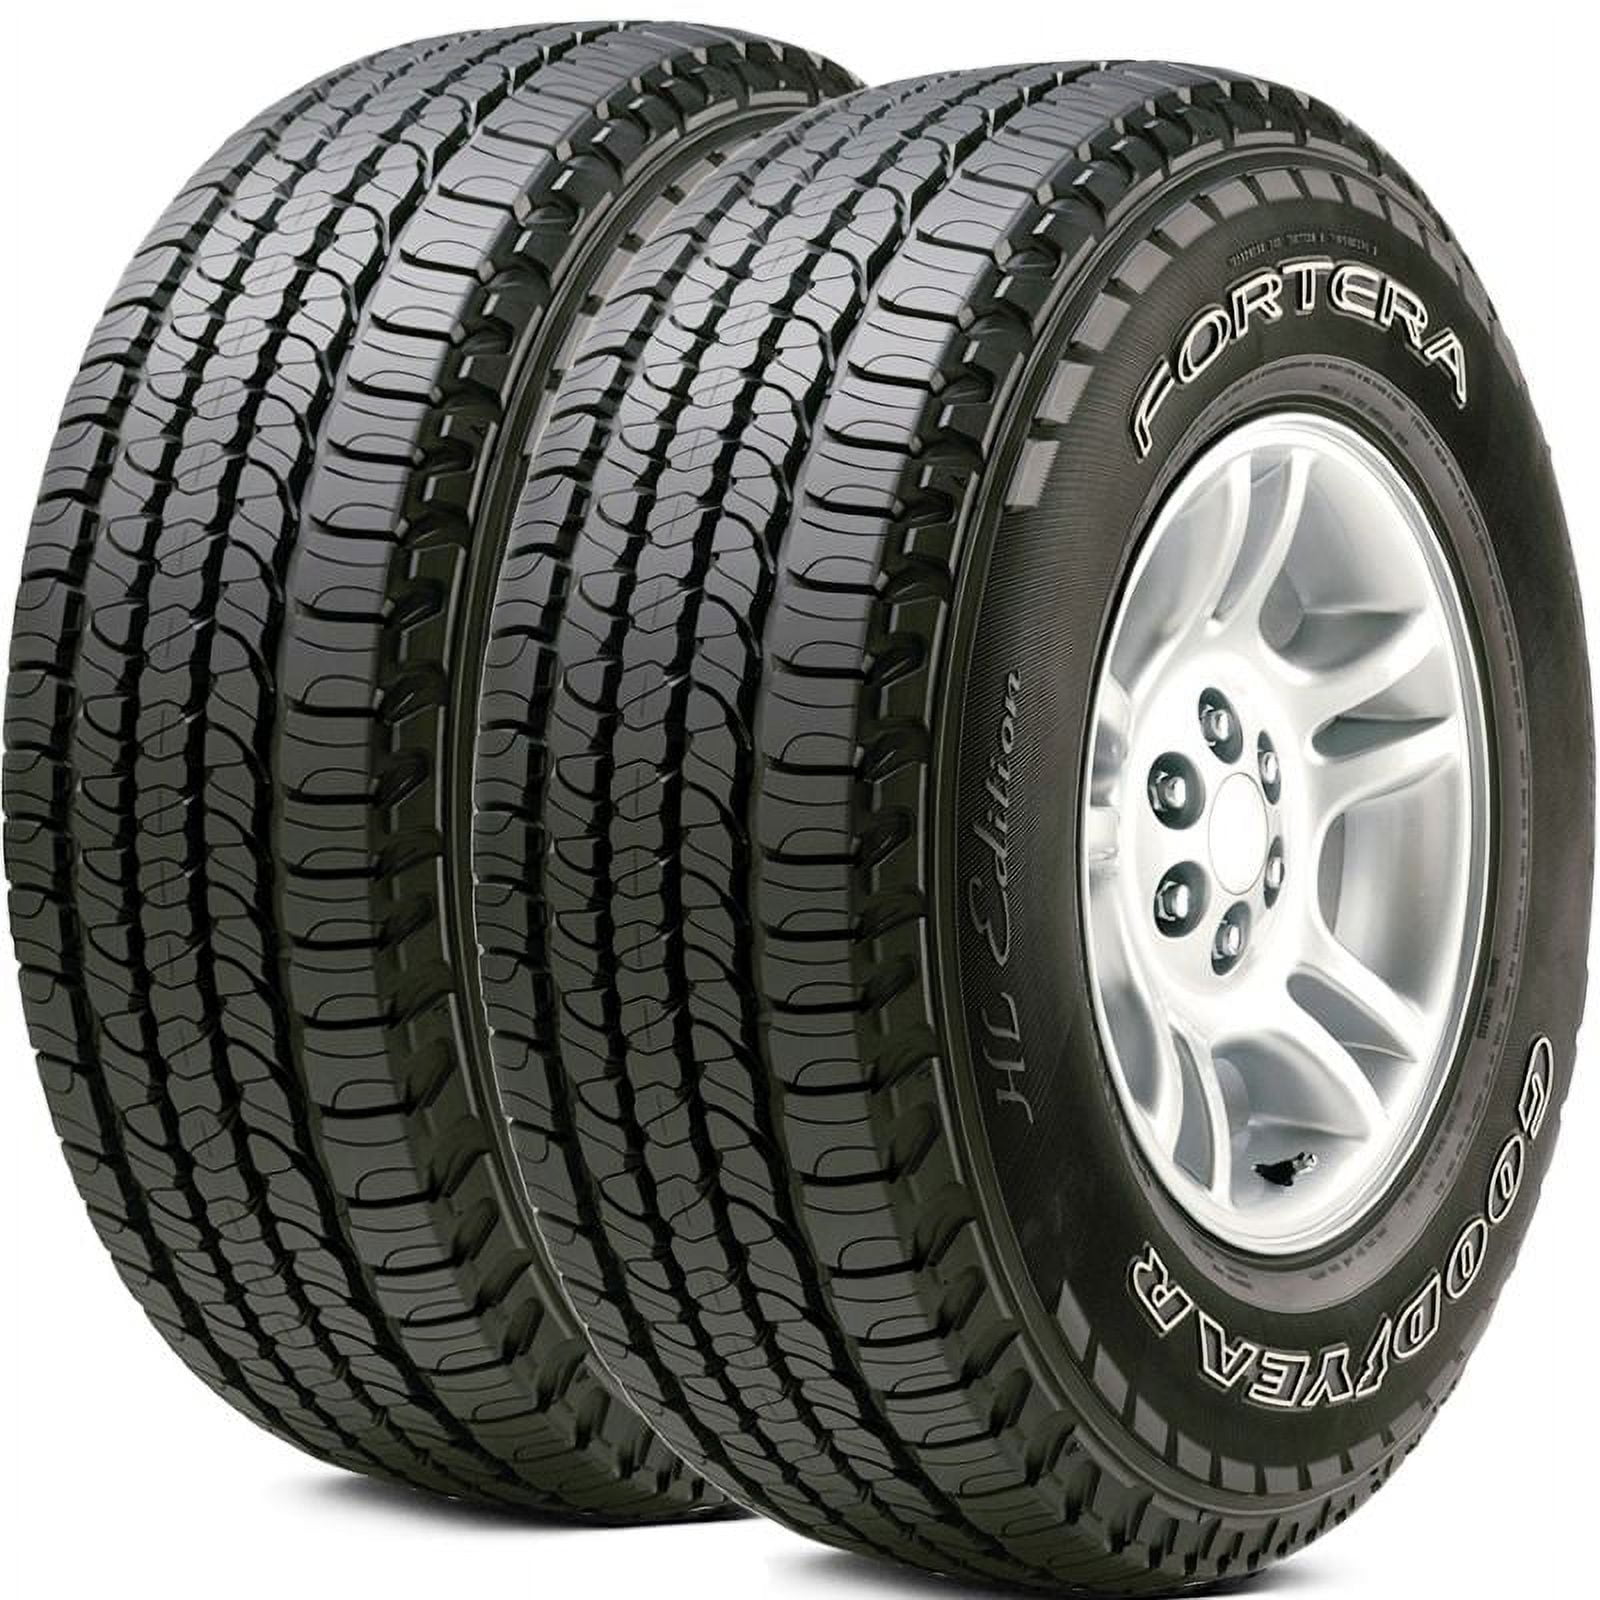 2 Goodyear Fortera HL P245/65R17 105T Tires, All Season, M+S, SUV, 60K MILE  151284203 / 245/65/17 / 2456517